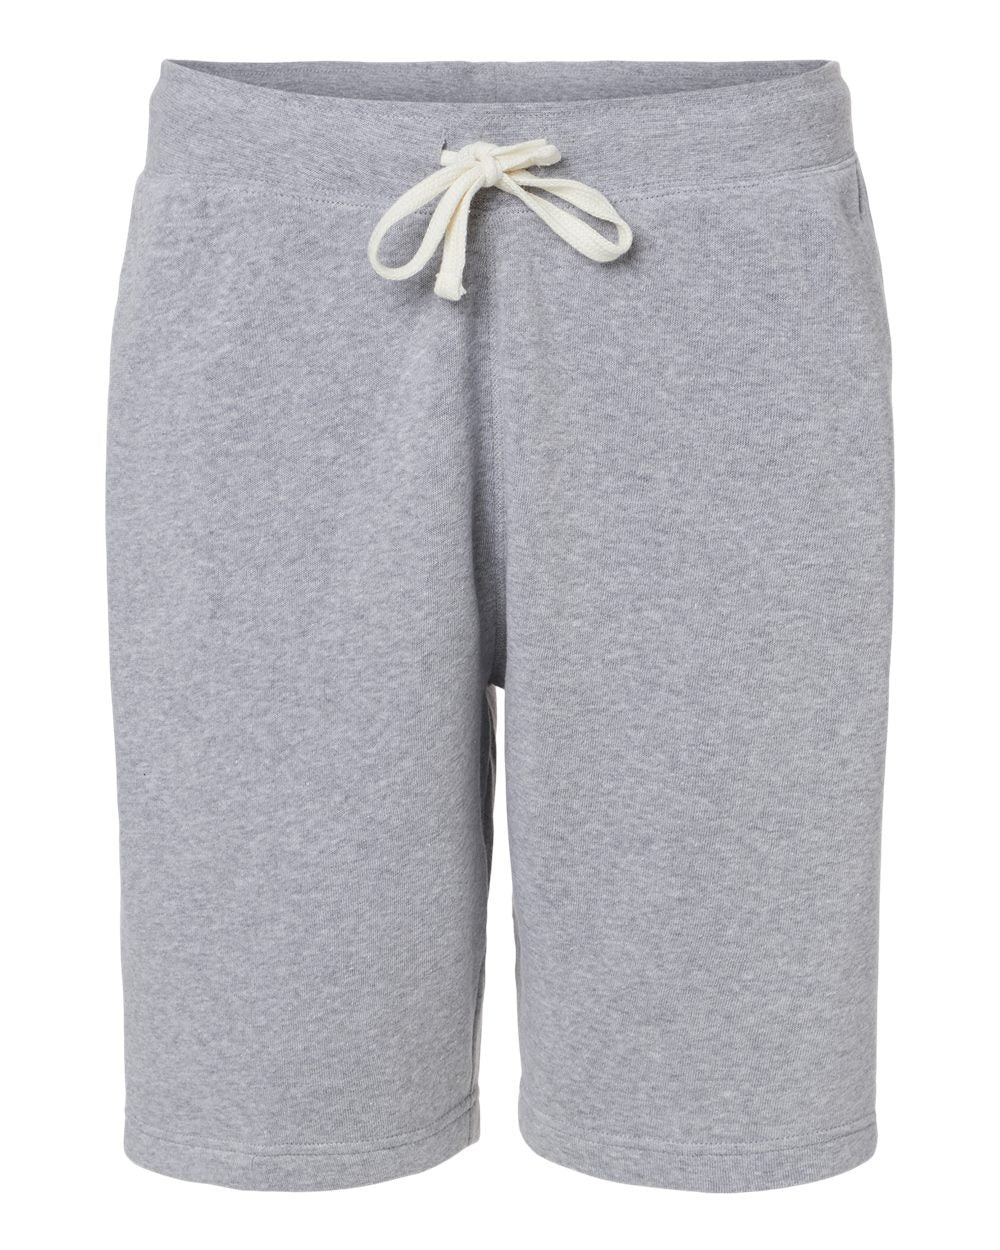 Fleece Shorts 2 - DSP On Demand